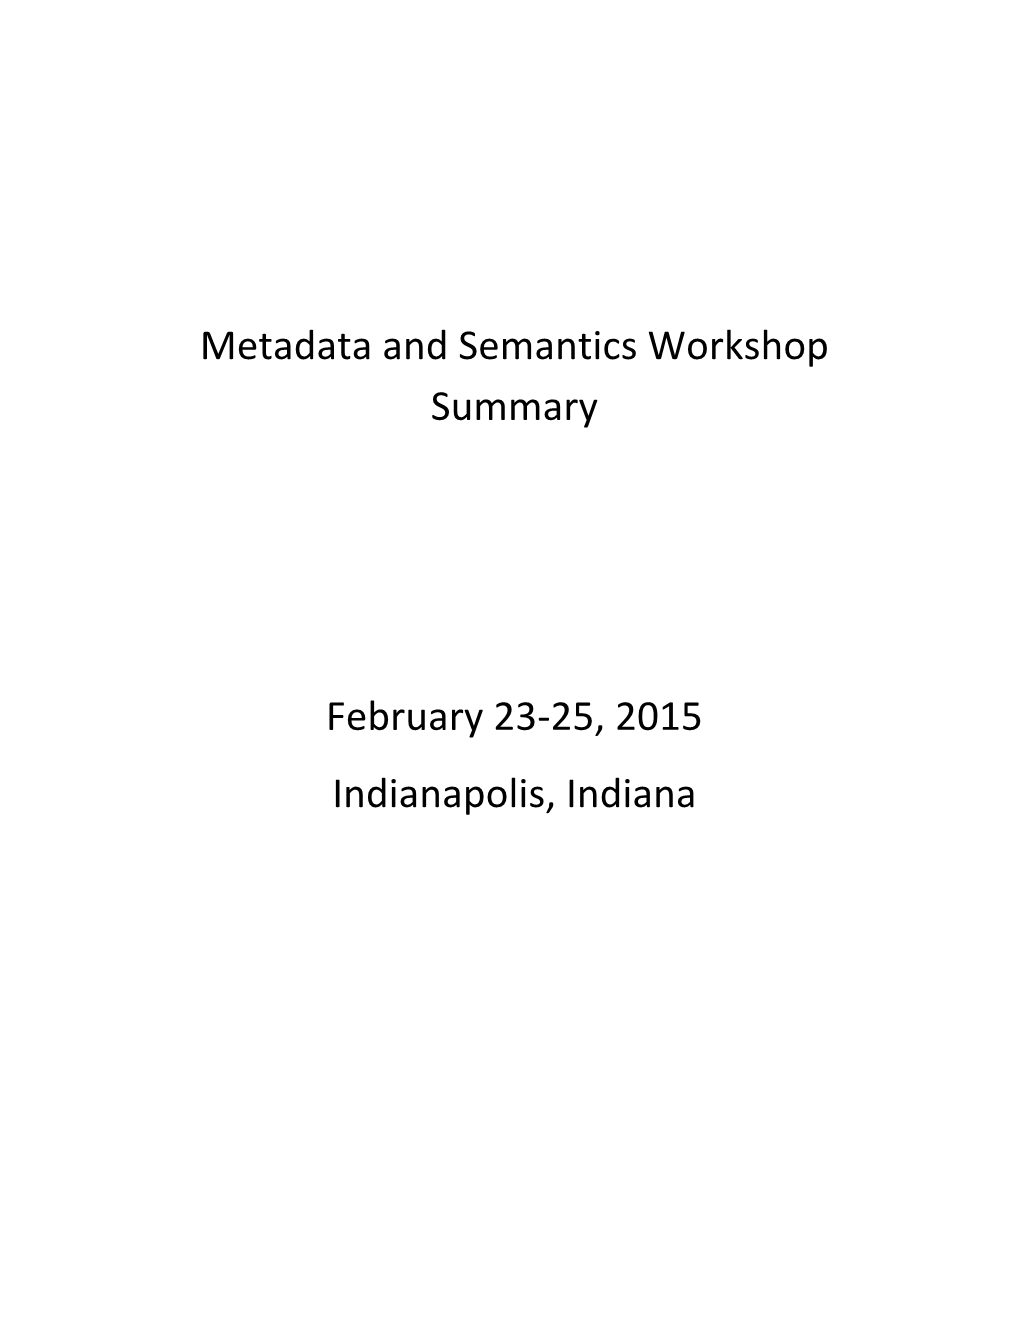 Metadata and Semantics Workshop Summary